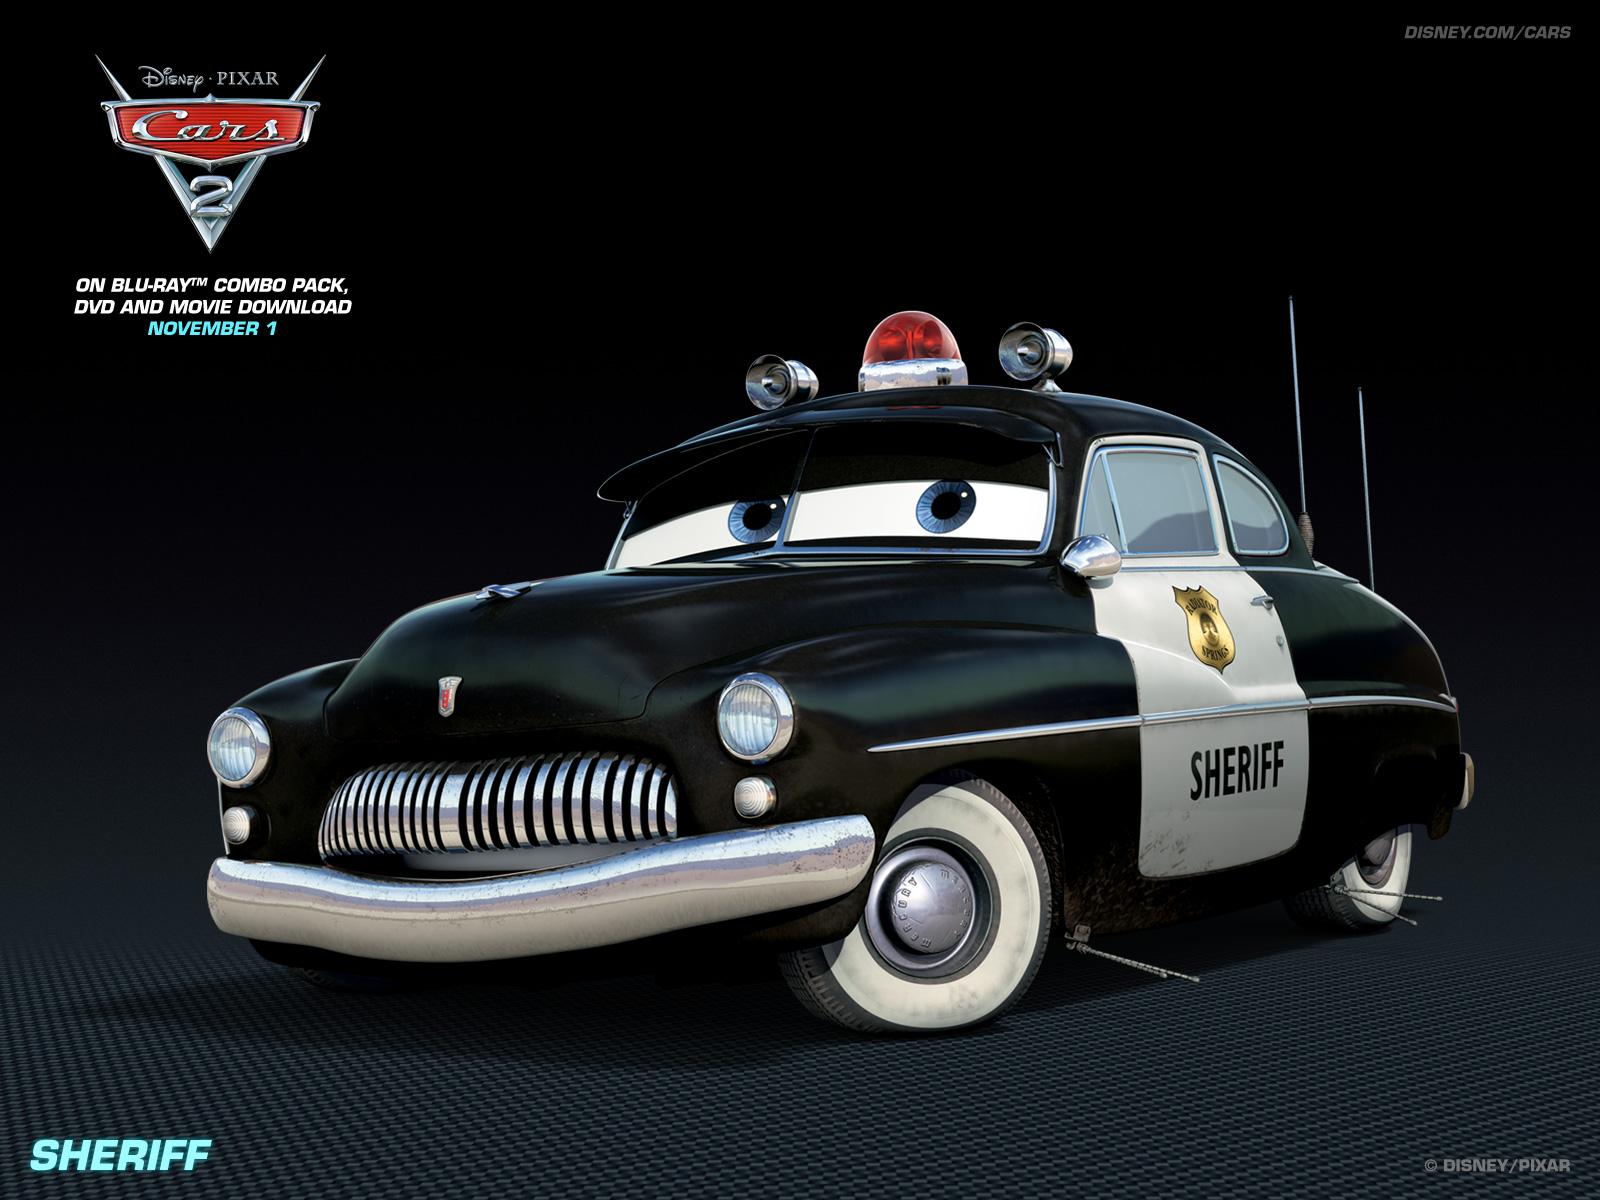 Disney Pixar Cars - Sheriff HD wallpaper and background